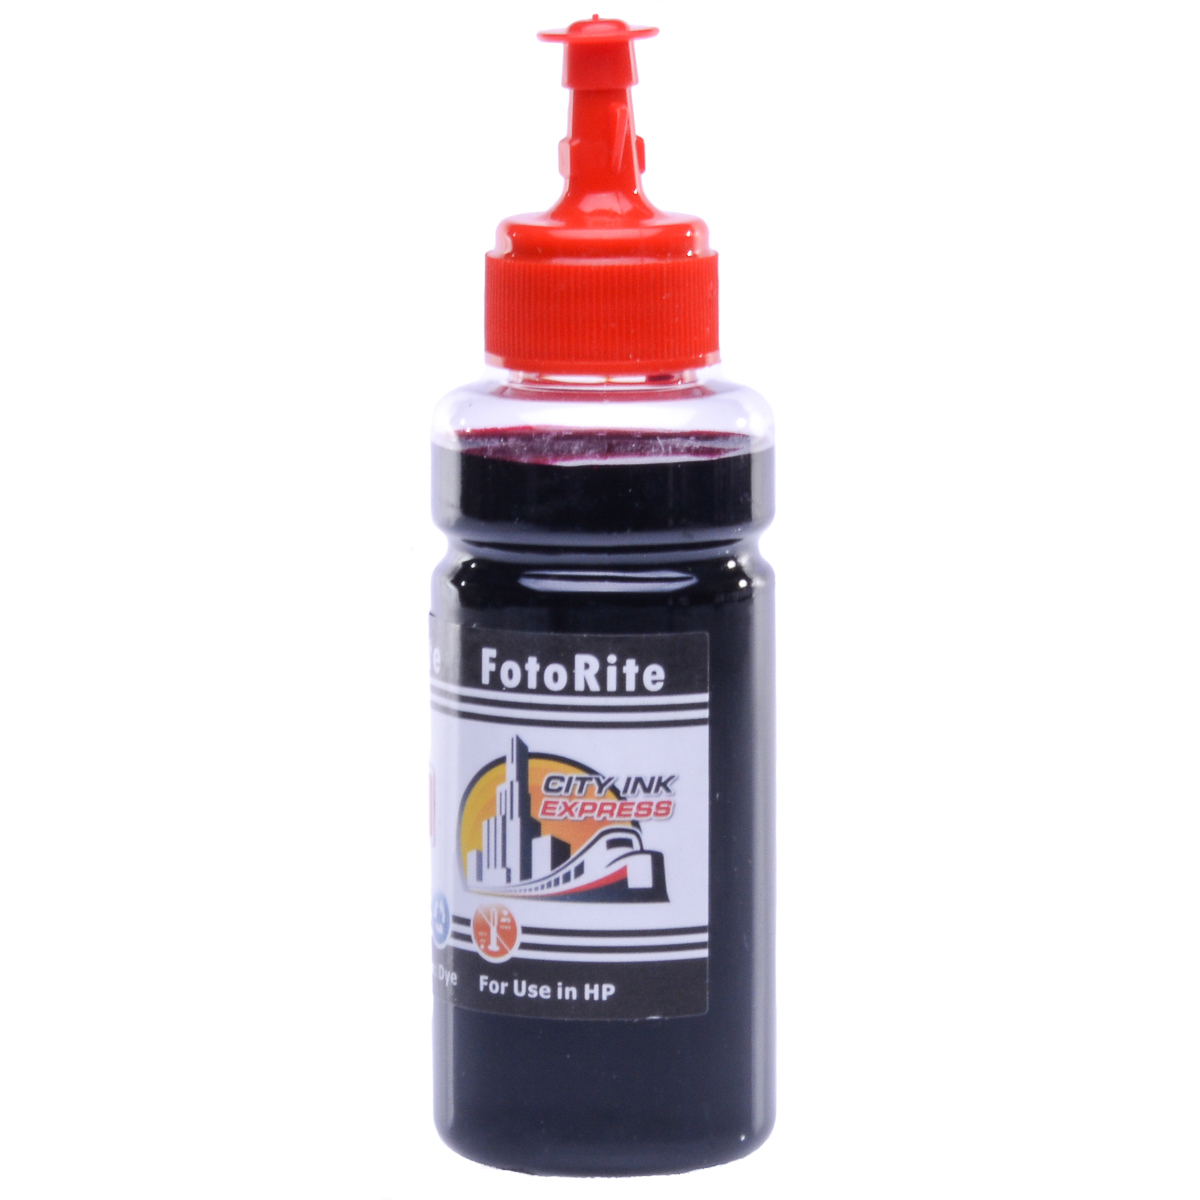 Cheap Magenta dye ink replaces HP Photosmart 7520 - HP 364